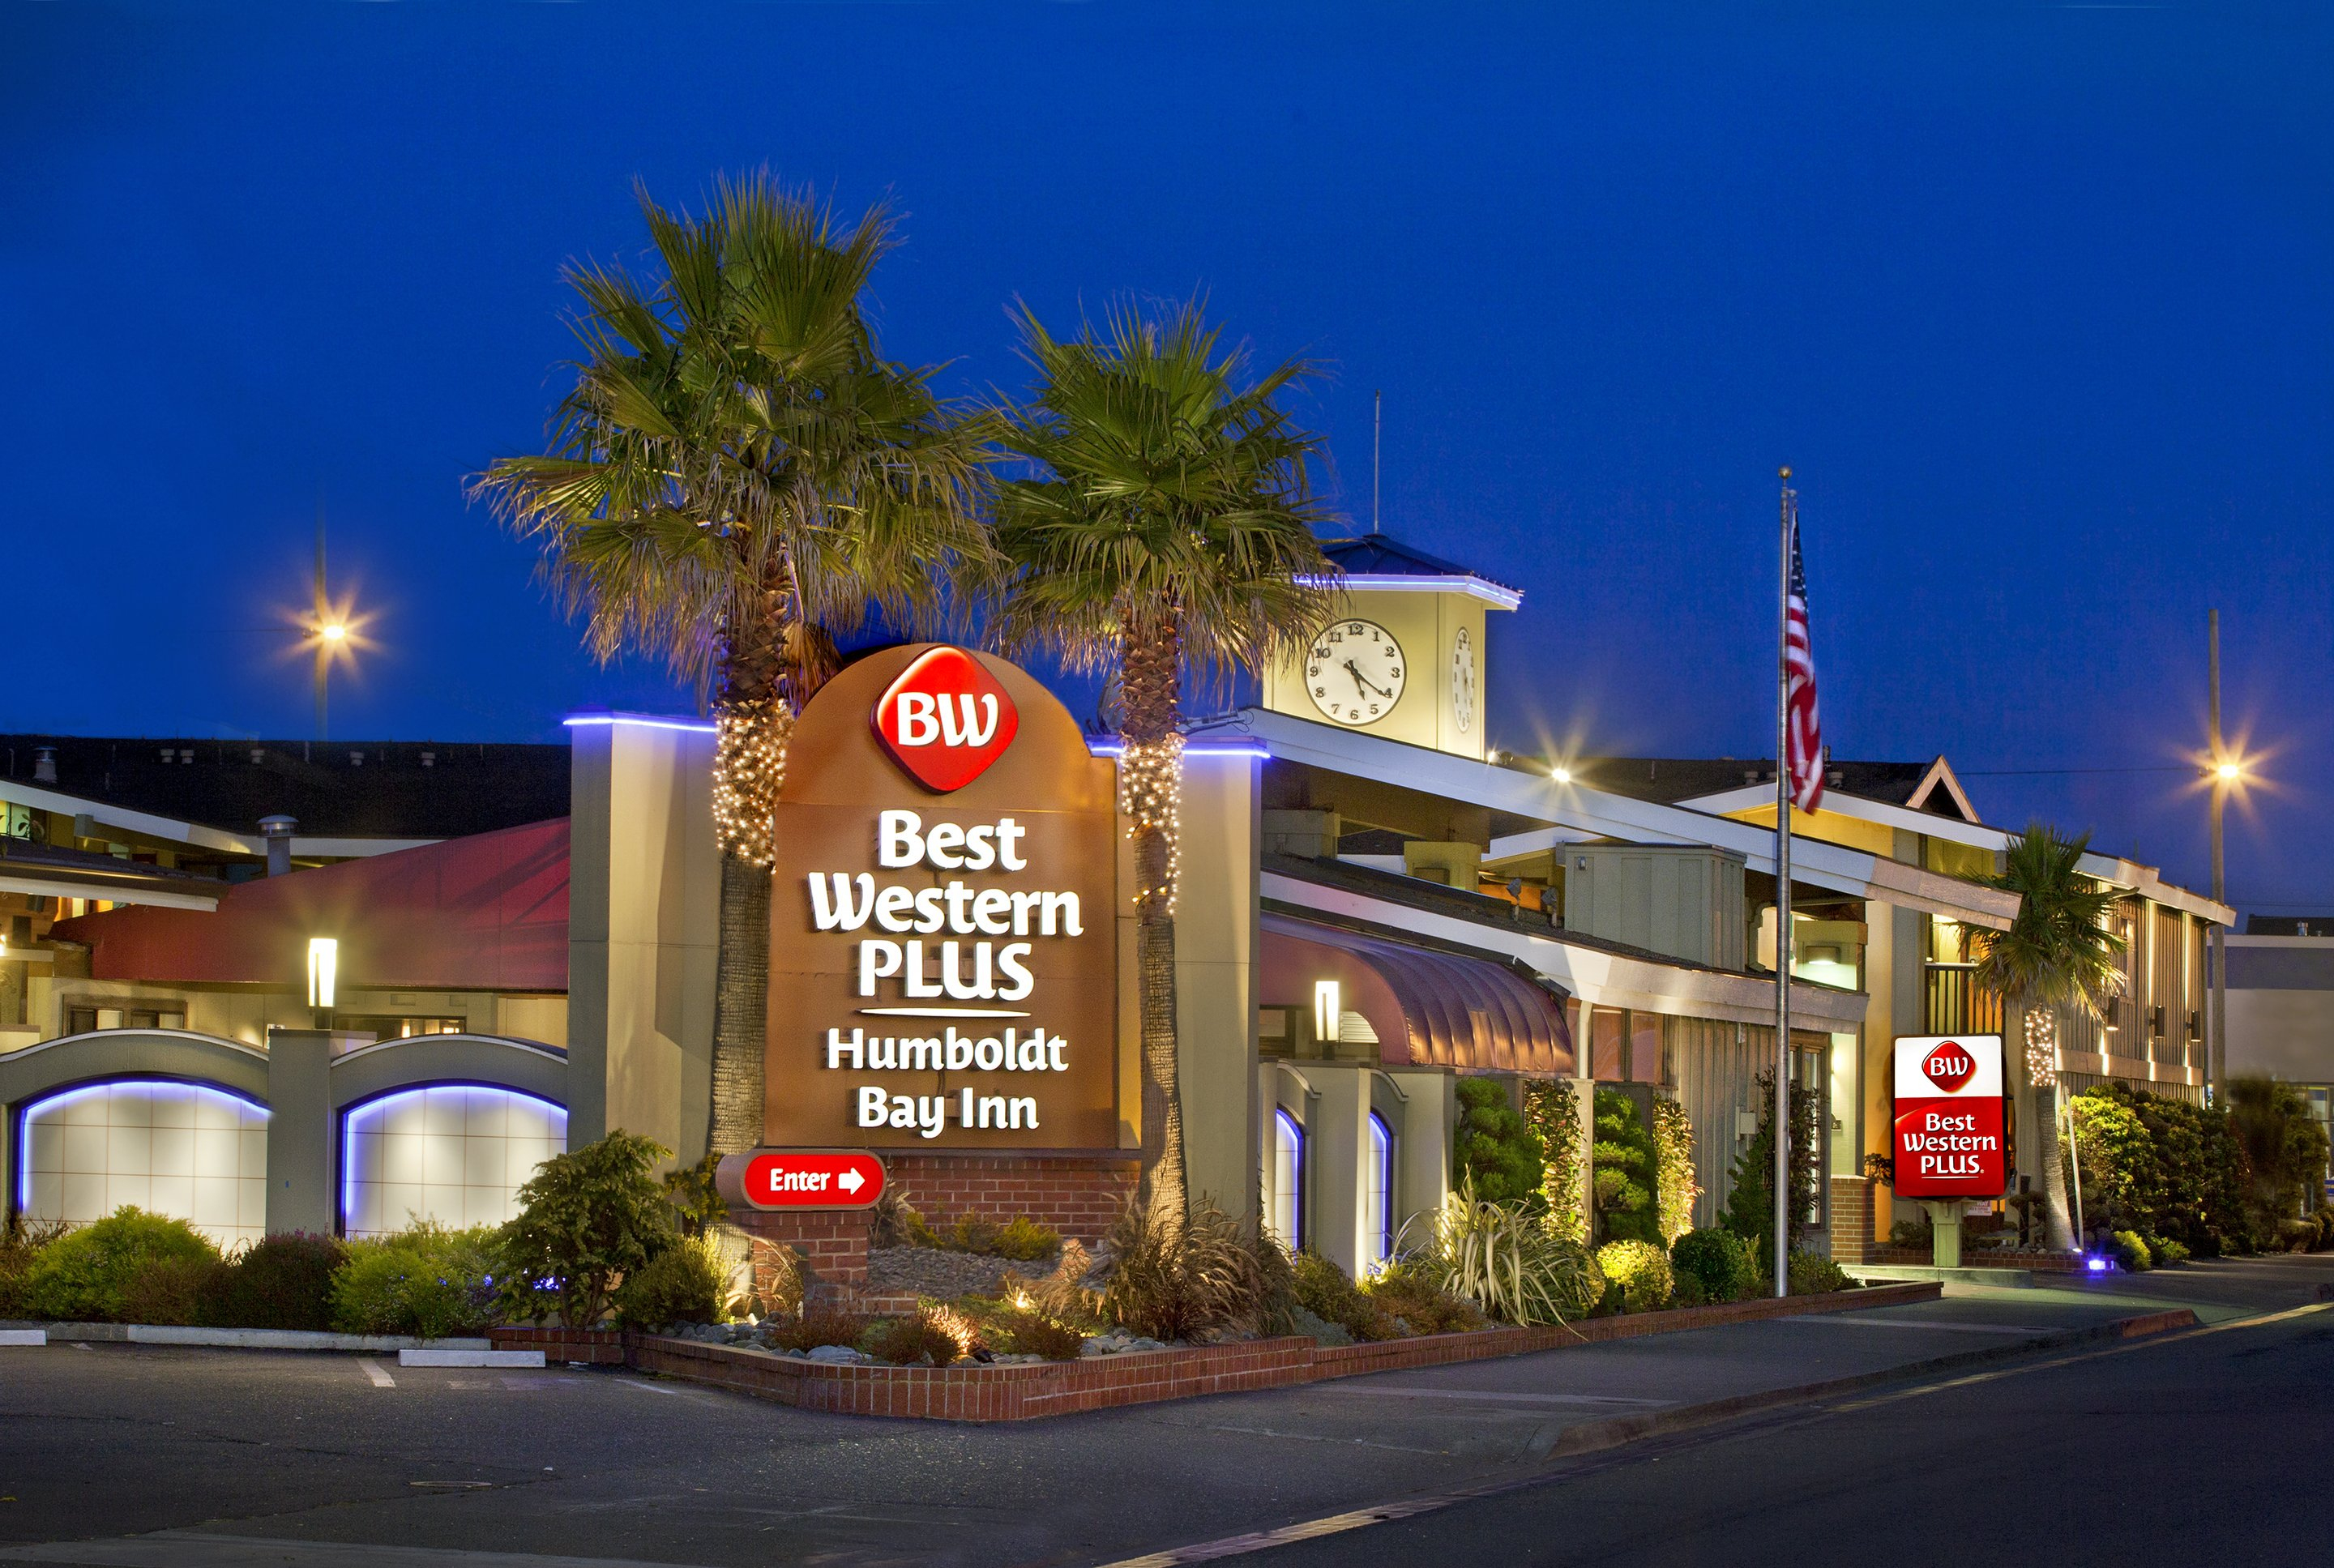 Hotel In Eureka Ca | Best Western Plus Humboldt Bay Inn - Map Of Best Western Hotels In California